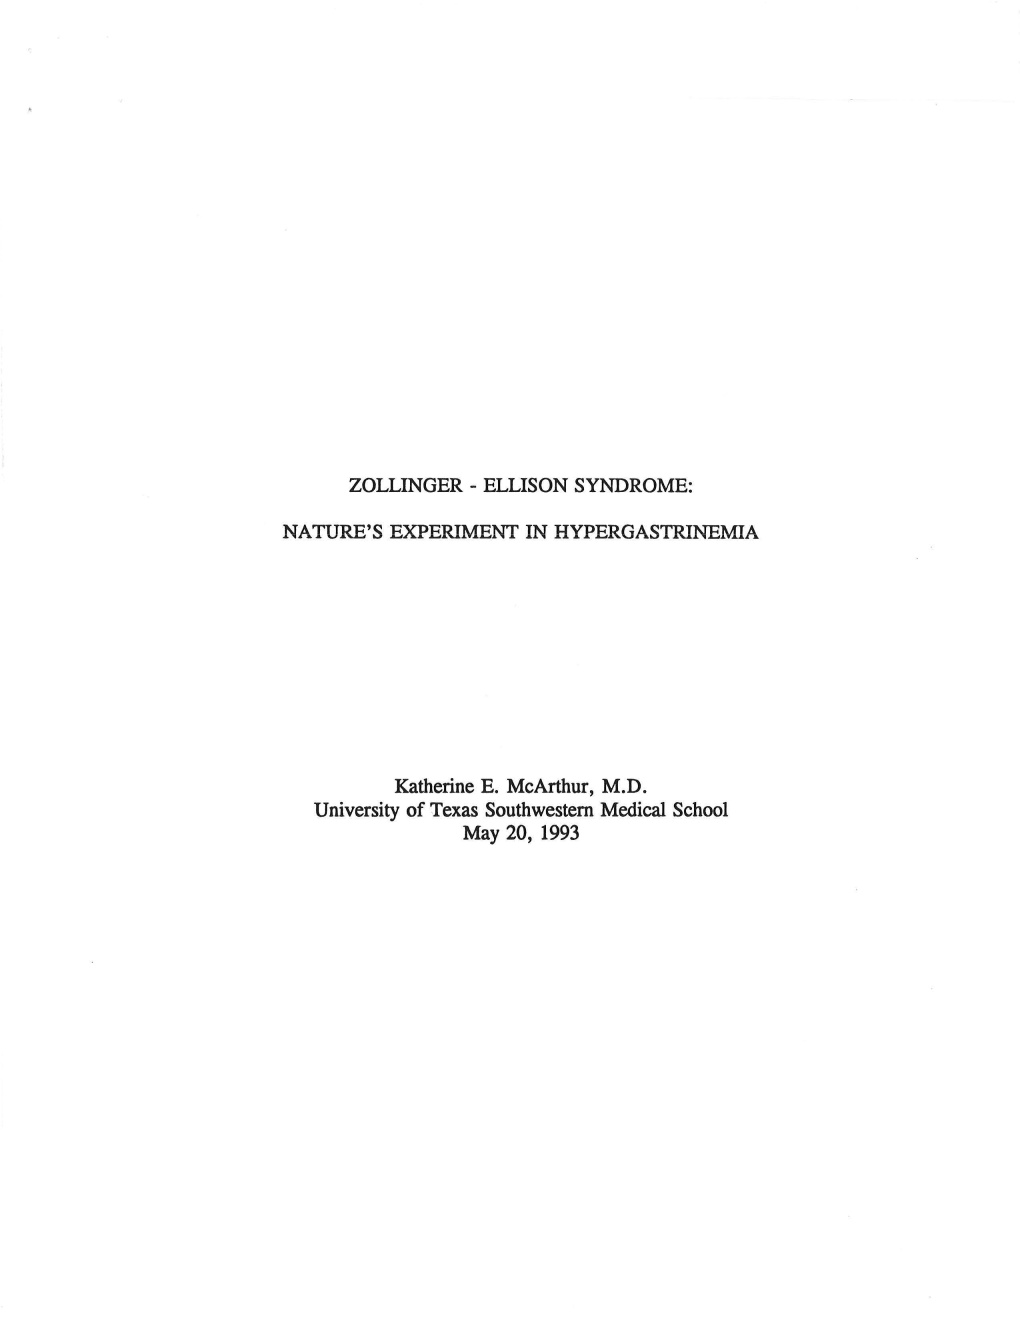 Zollinger - Ellison Syndrome